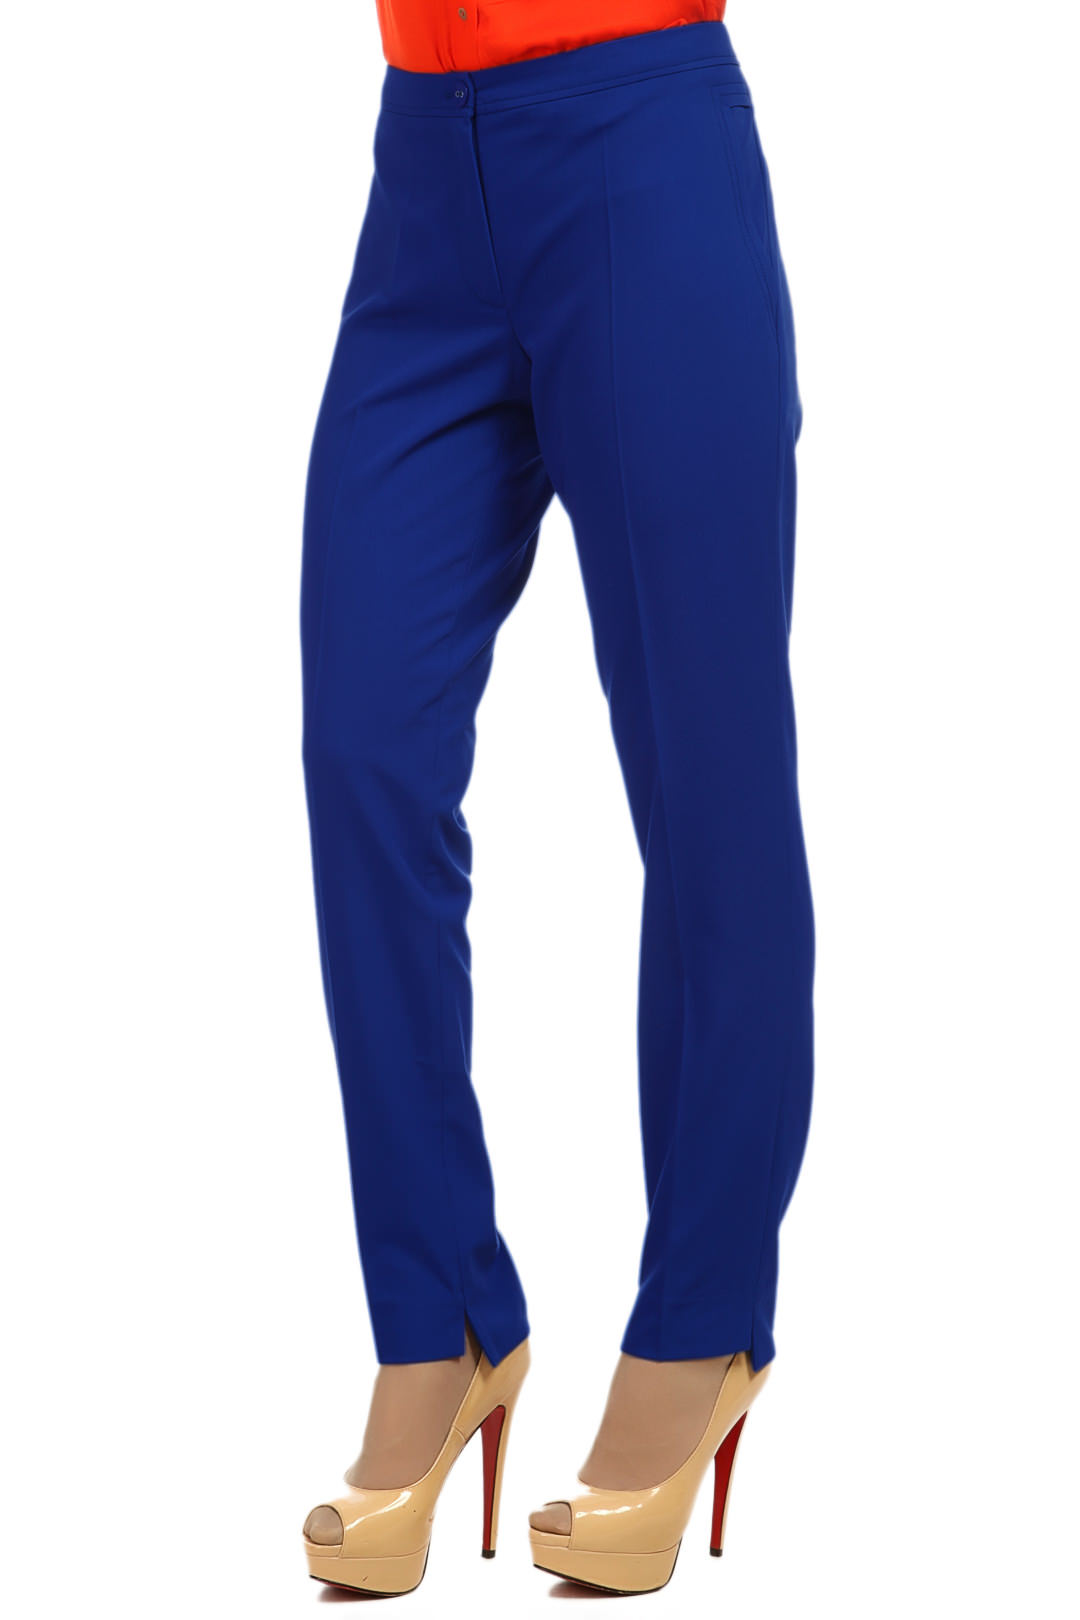 Фото товара 7912, синие классические женские брюки